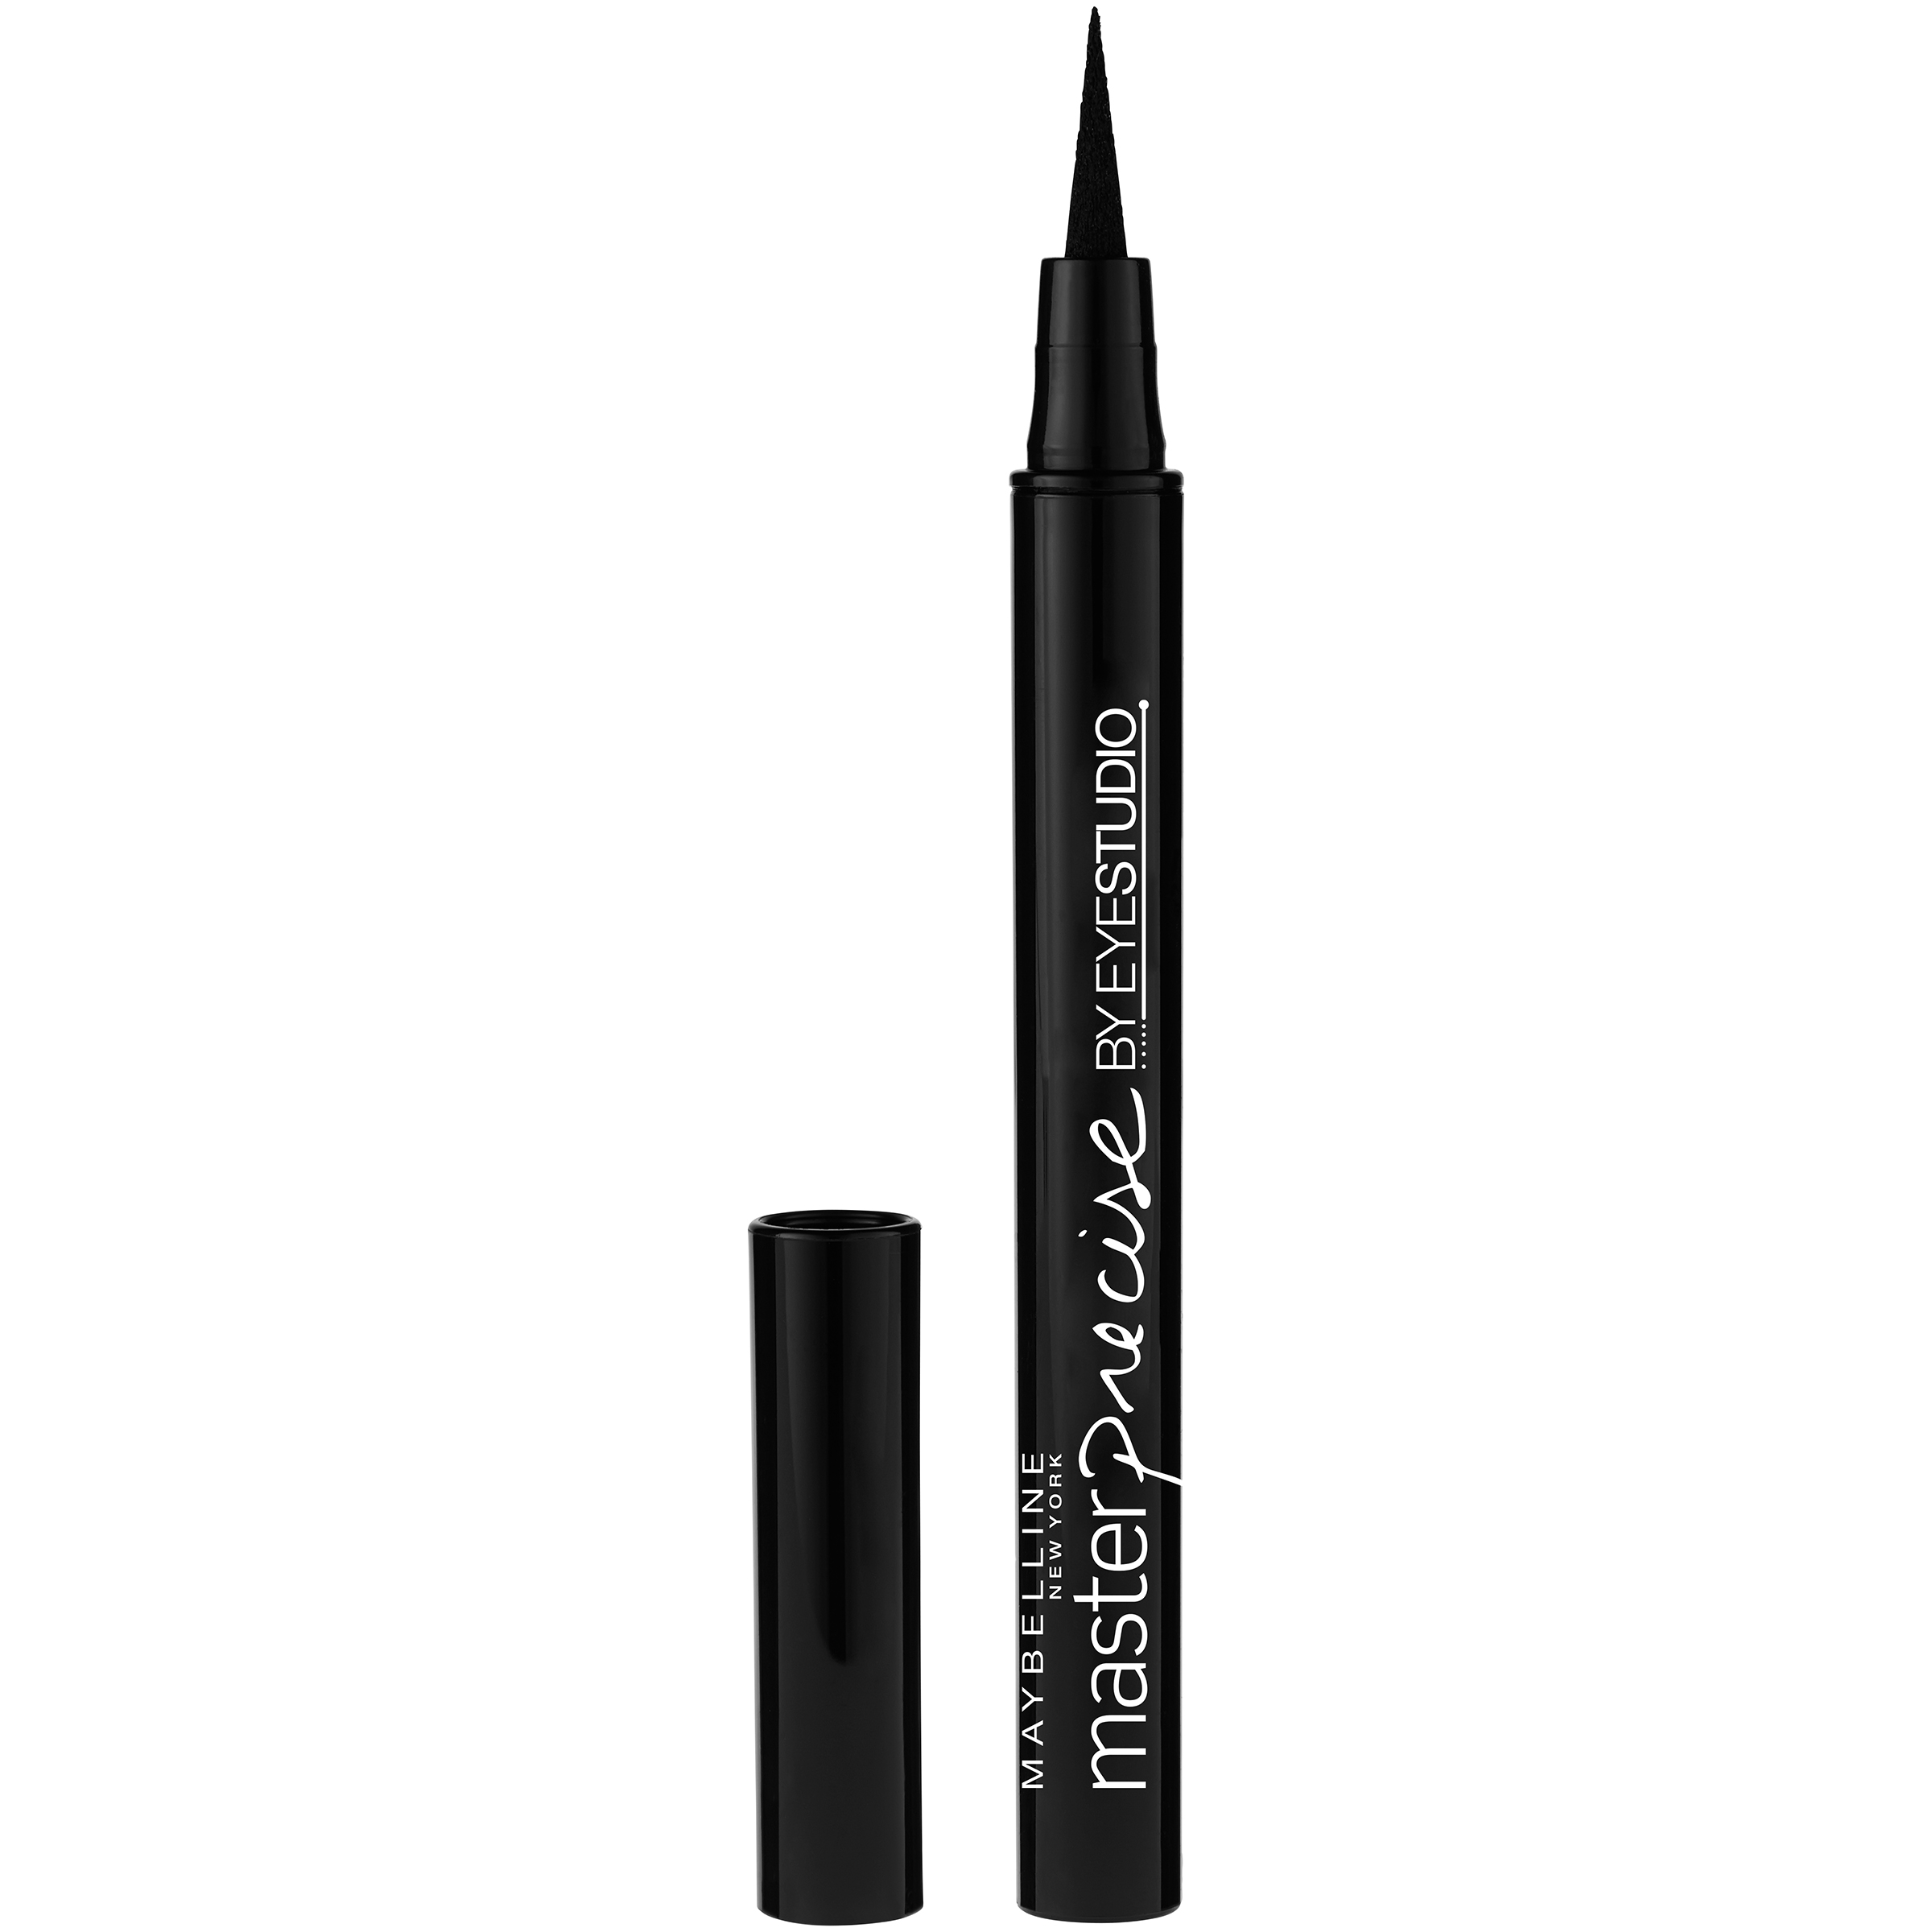 Maybelline Eye Studio Master Precise Pencil Eyeliner, Black - image 2 of 6